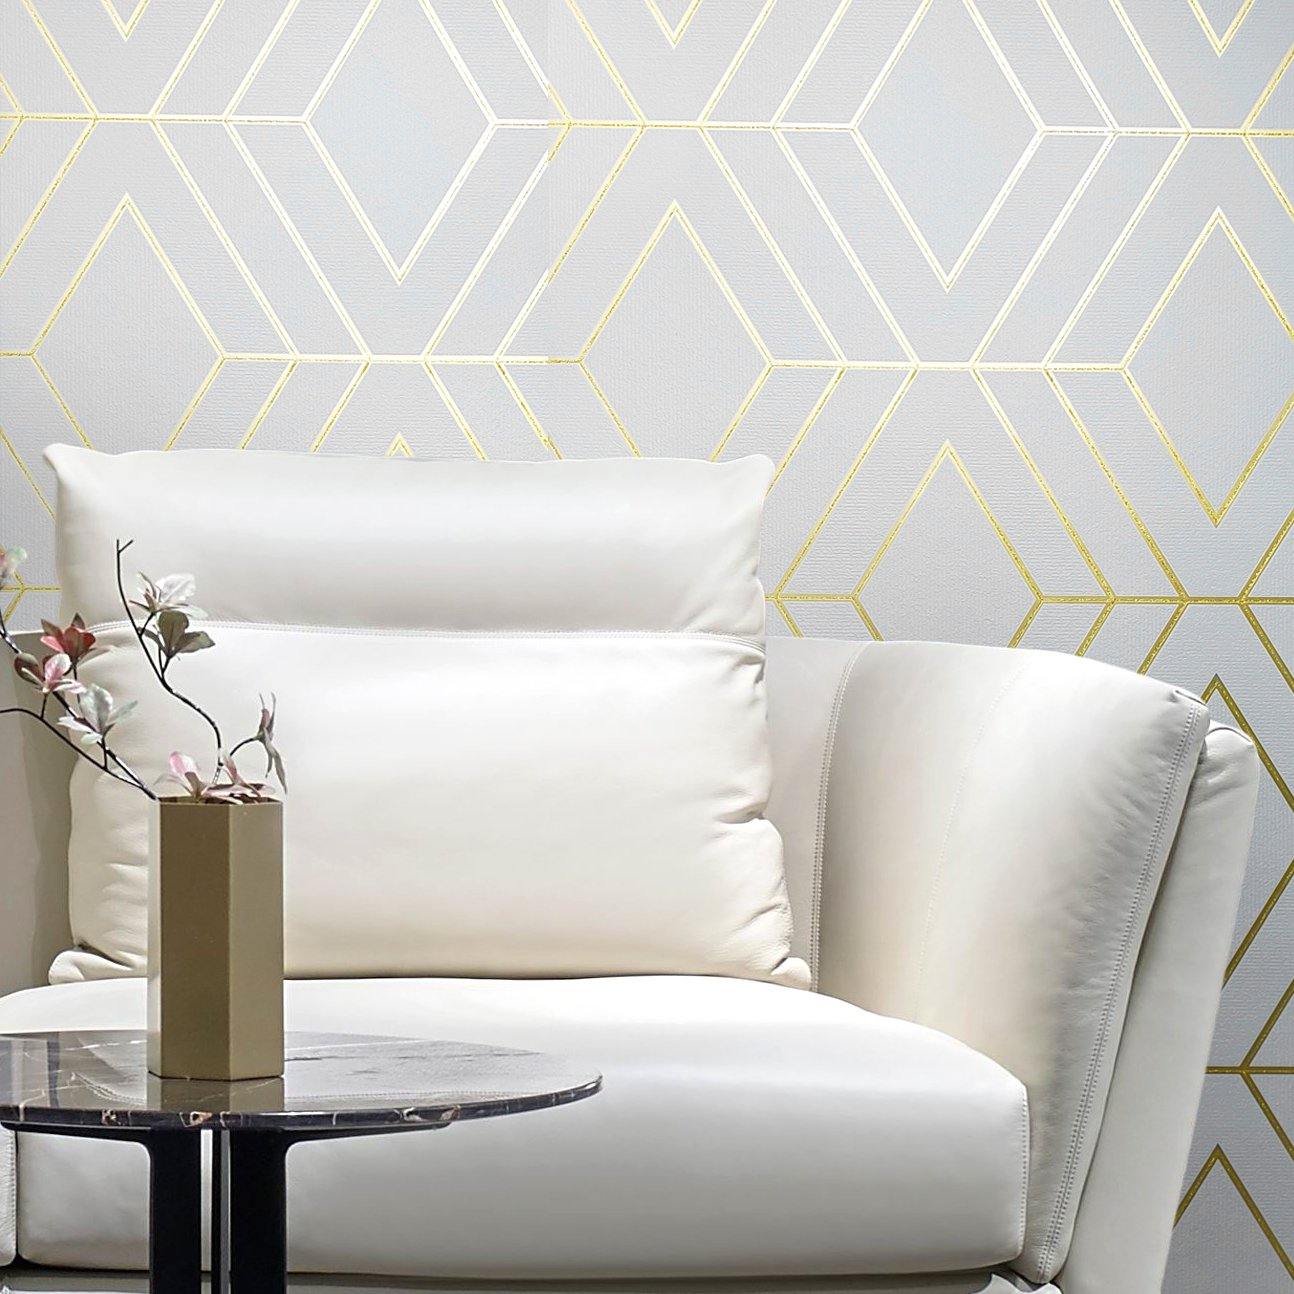 WM4234401 Geometric White Gold Glitter Diamond Textured Wallpaper